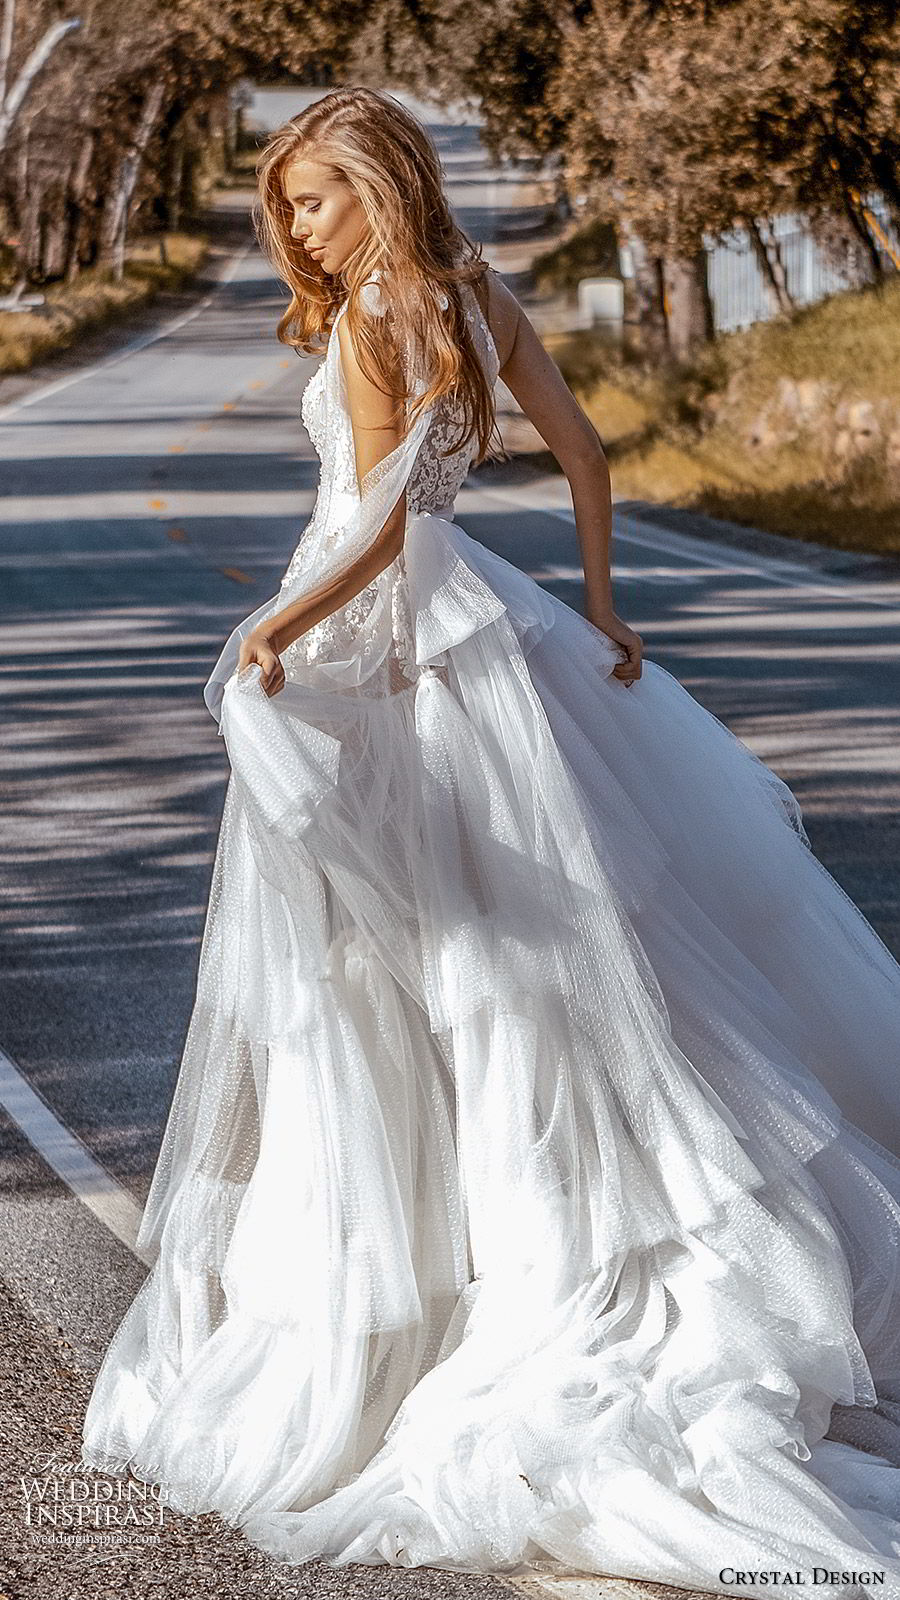 crystal design 2020 couture bridal sleeveless halter neck lace bodice drop waist ball gown wedding dress (6) romantic boho chic chapel train bv 